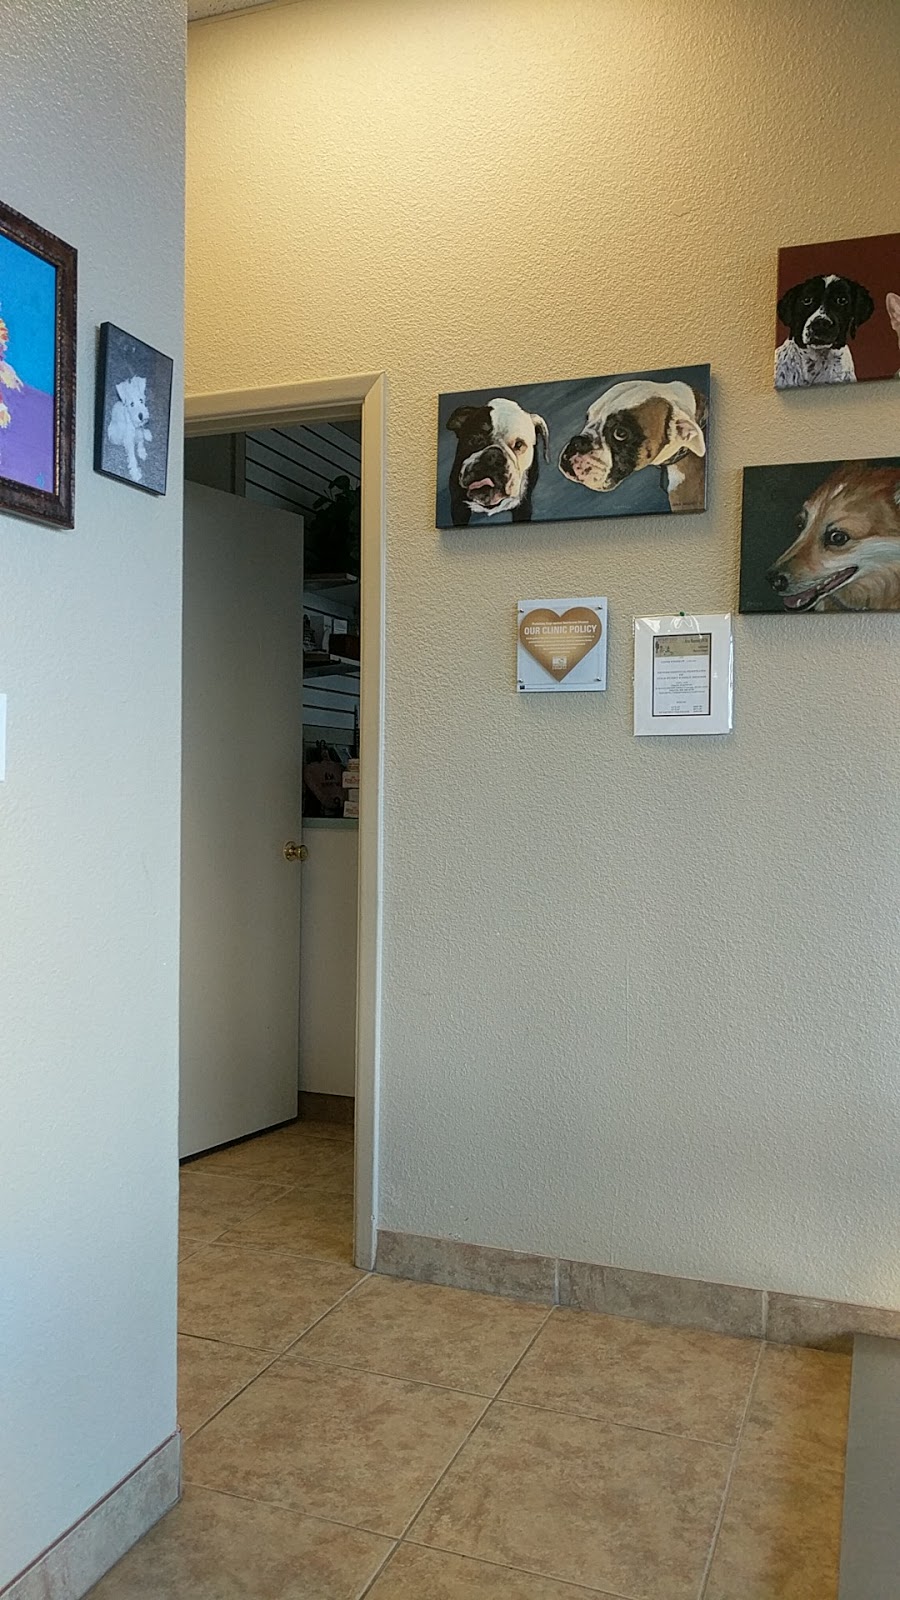 Desert Tails Animal Clinic - veterinary care  | Photo 3 of 3 | Address: 9619 N Hayden Rd #111, Scottsdale, AZ 85258, USA | Phone: (480) 998-2010